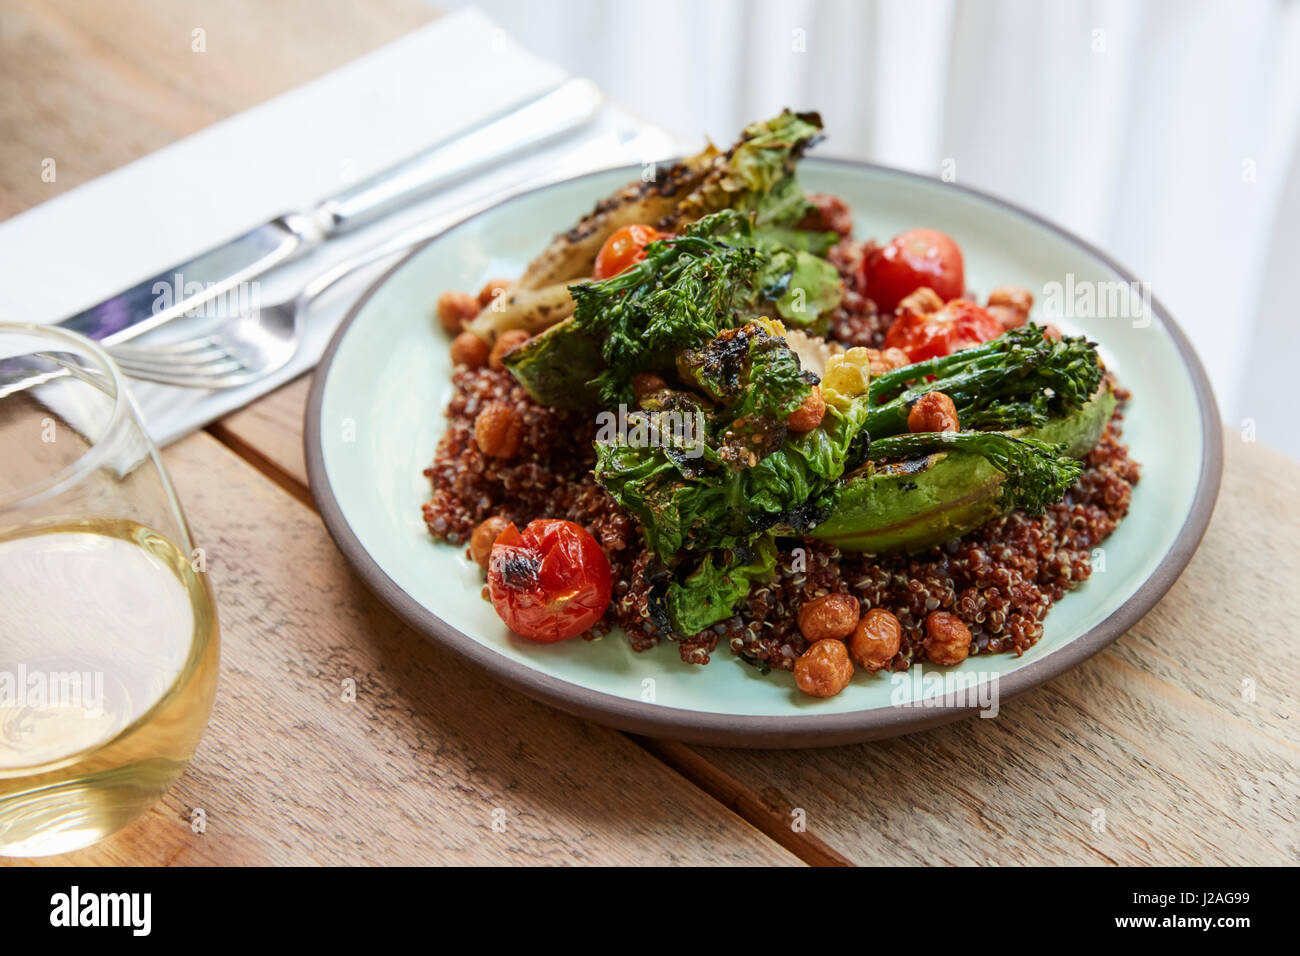 L'avocat, broccolini, pois chiche, Salade de quinoa, elevated view Banque D'Images